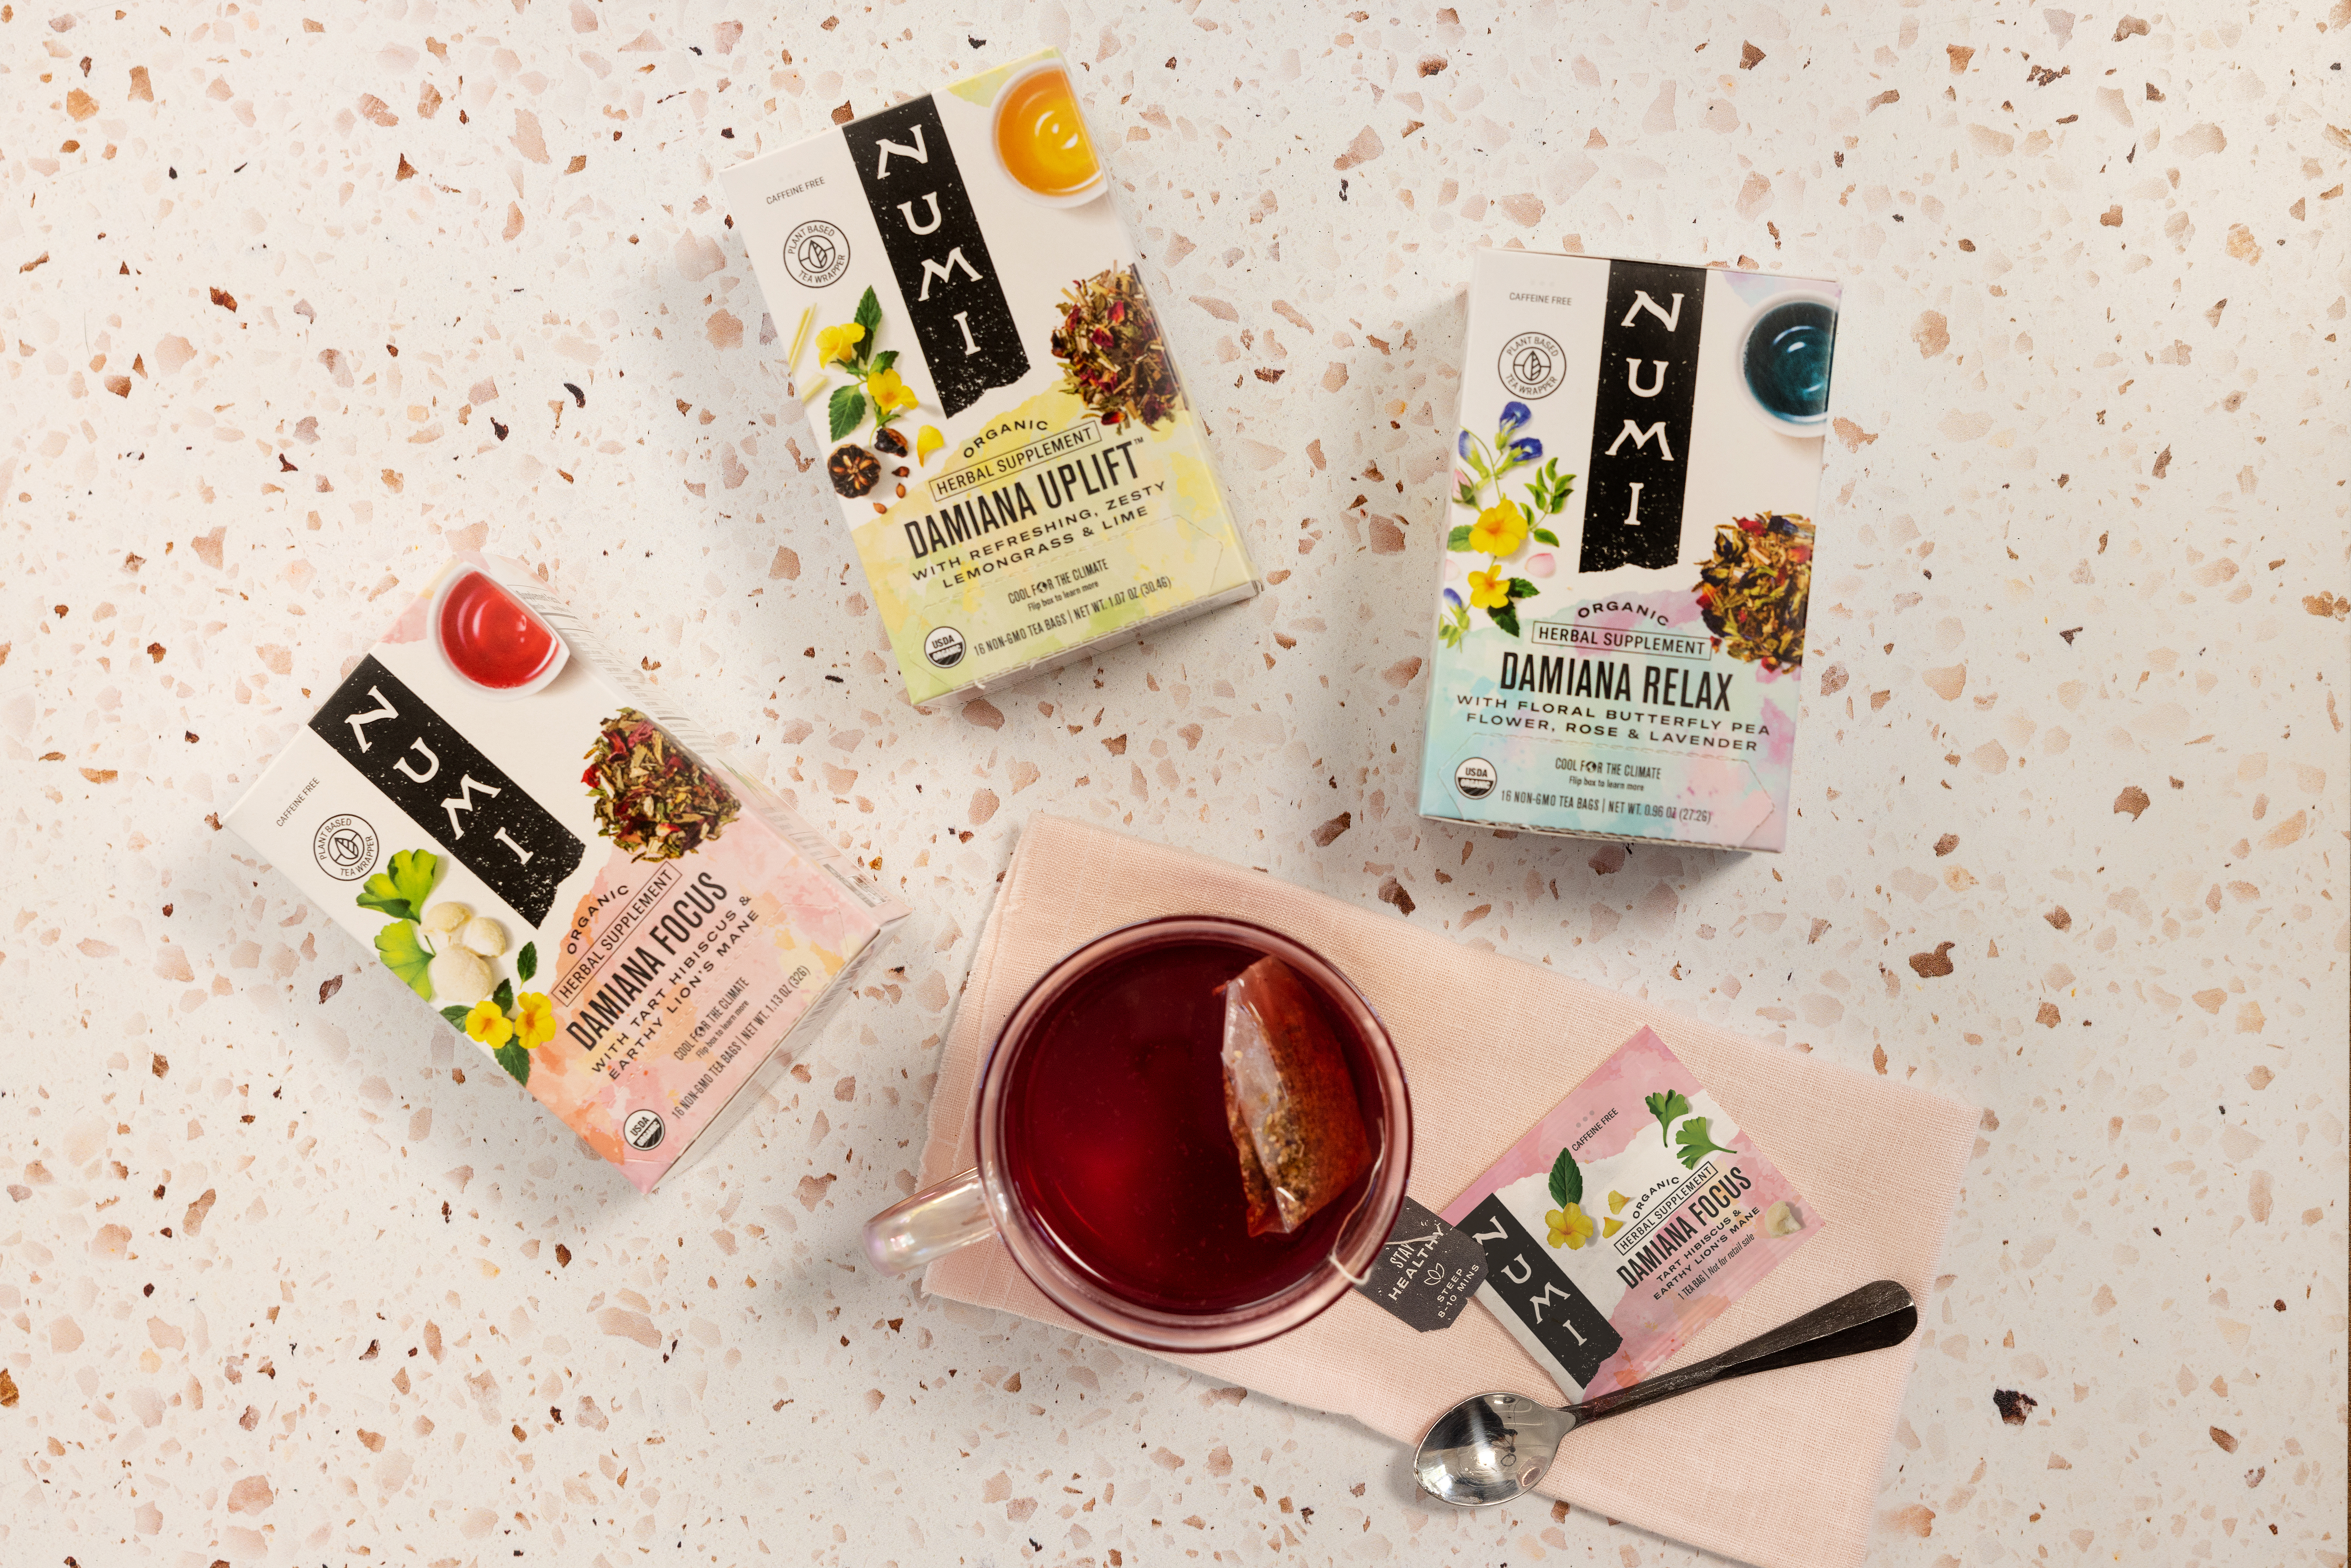 Numi Tea's New Relax and Regenerate Herbal Supplement Line